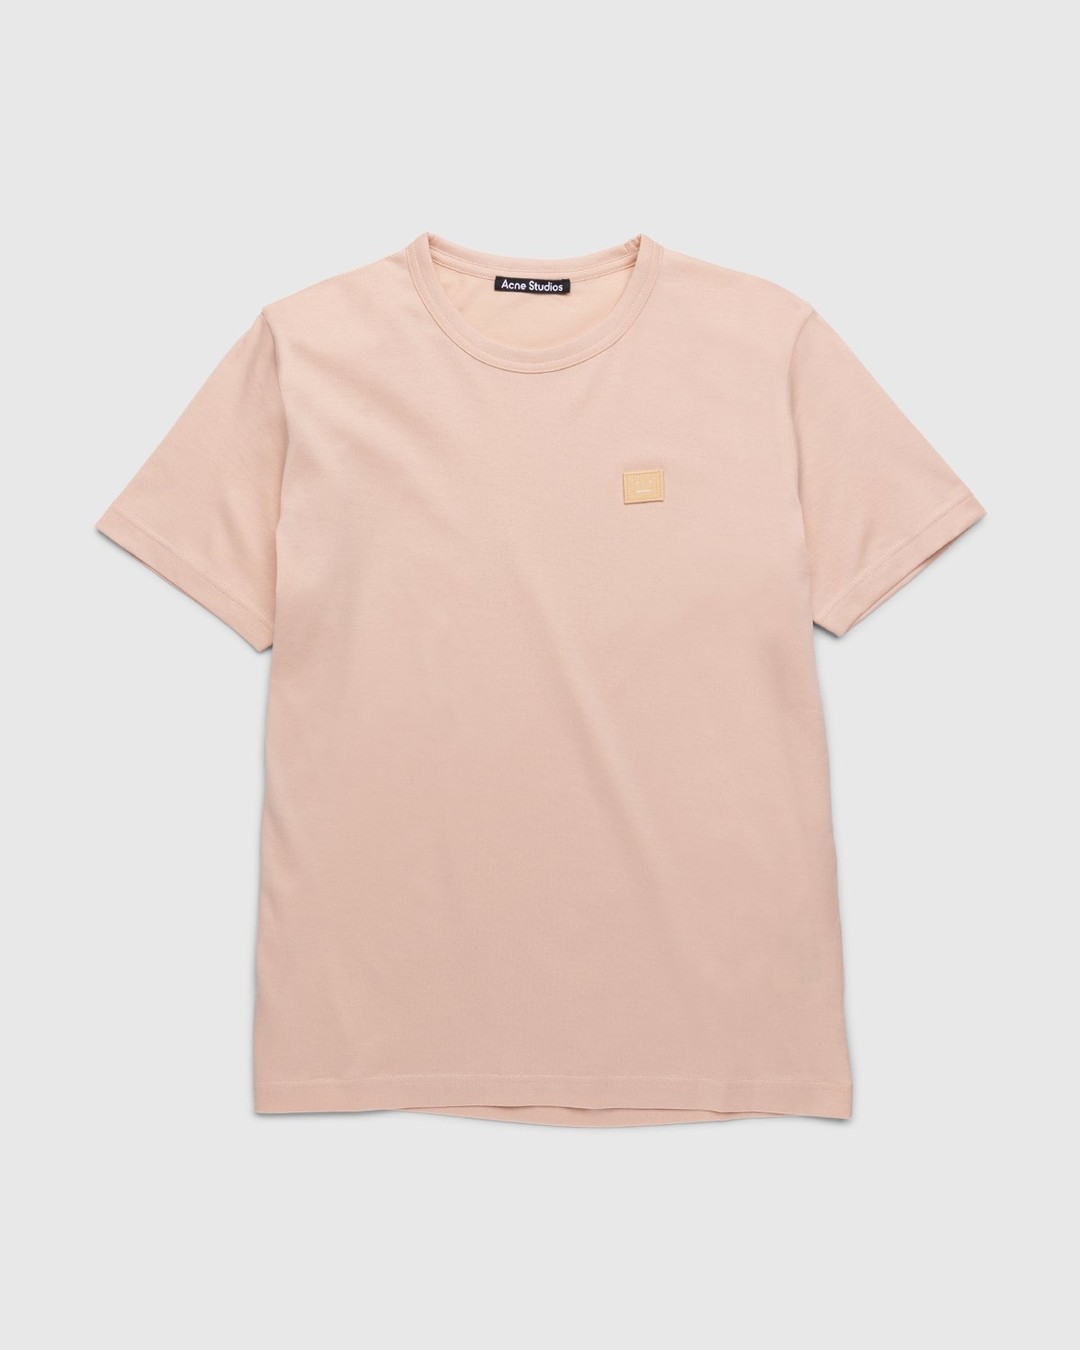 Acne Studios – Slim Fit T-Shirt Powder Pink - T-shirts - Pink - Image 1